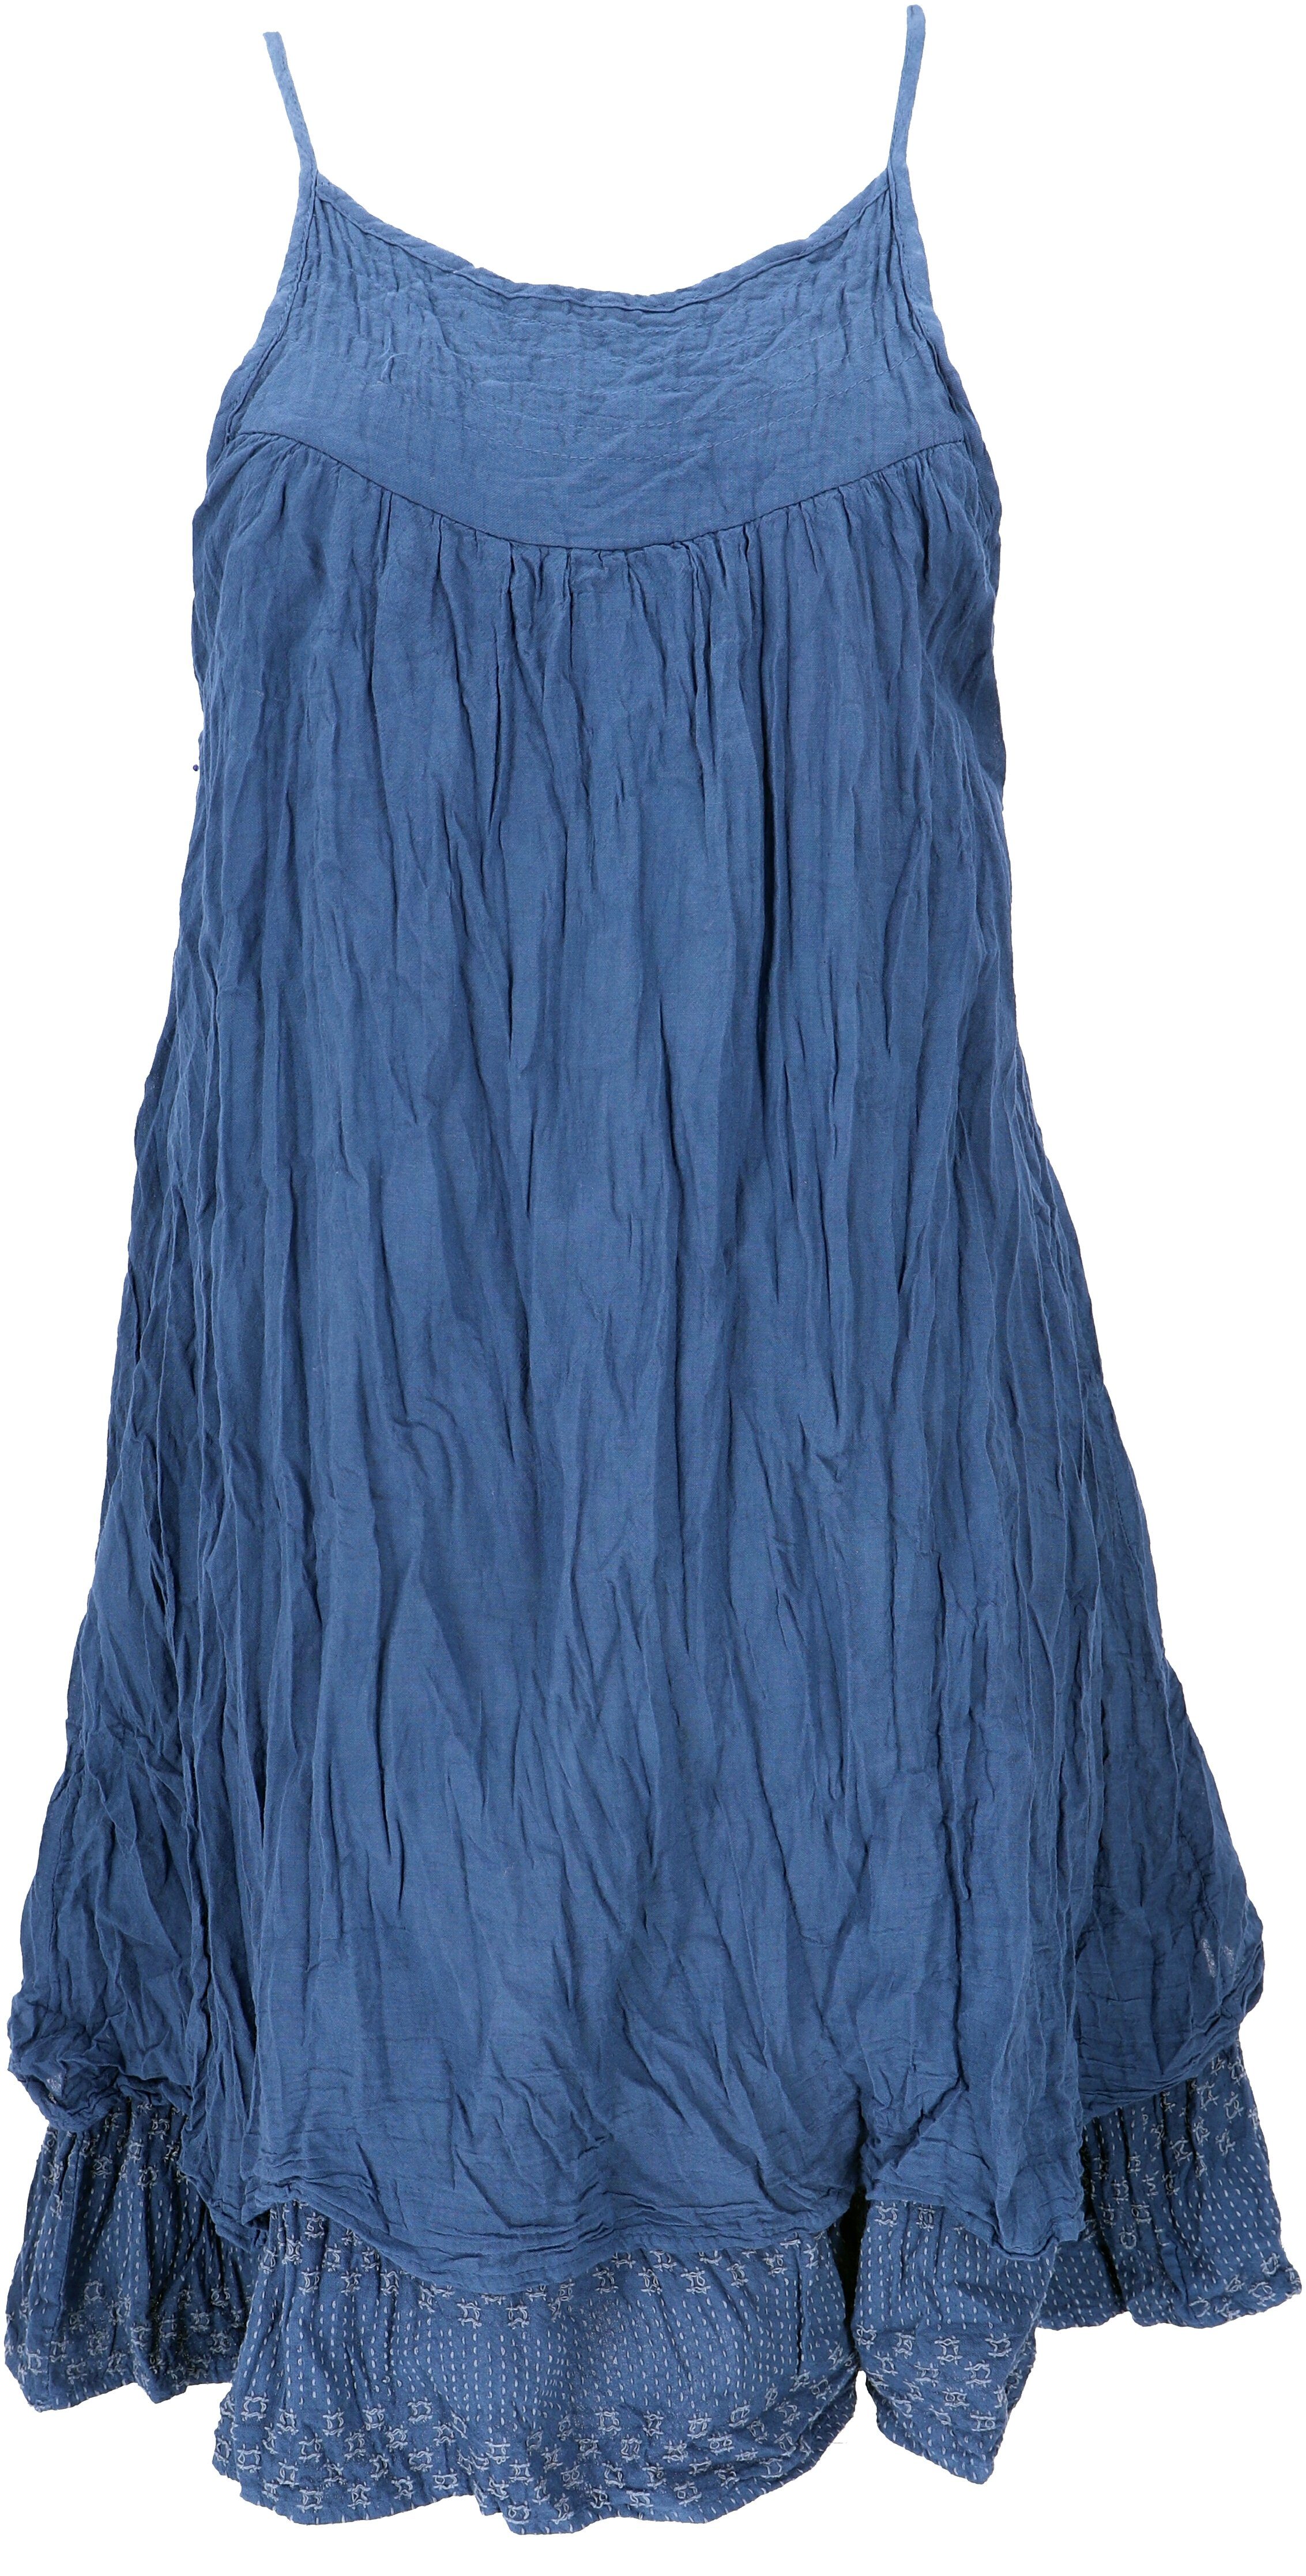 Bekleidung alternative Guru-Shop Sommerkleid,.. blau Boho Minikleid, Midikleid Krinkelkleid,